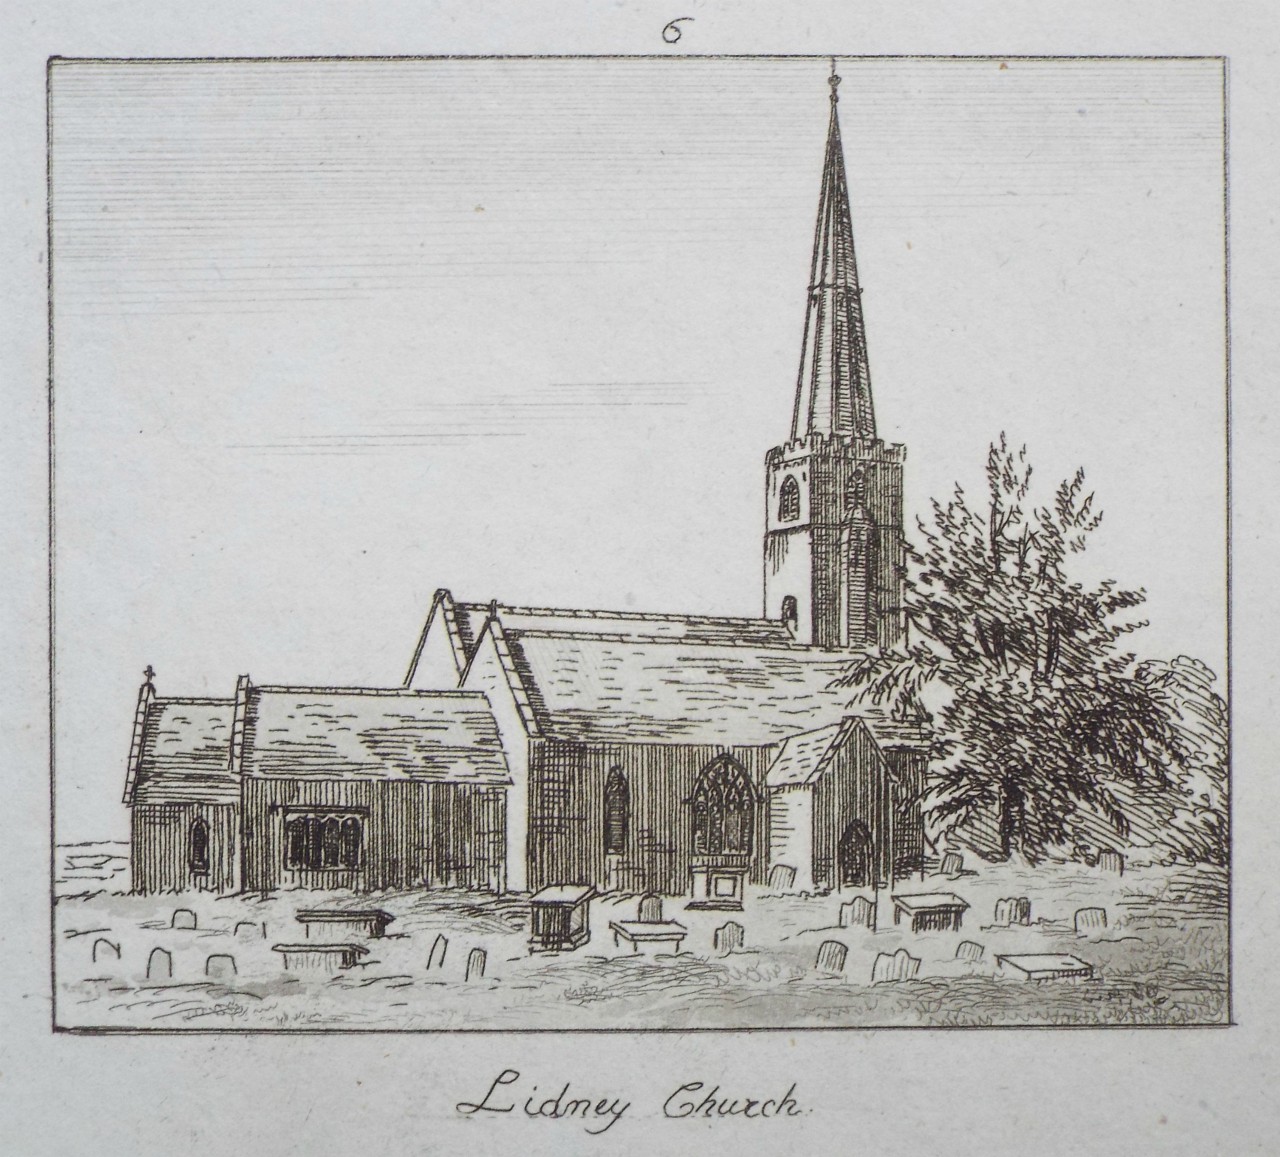 Etching with aquatint - Lidney Church